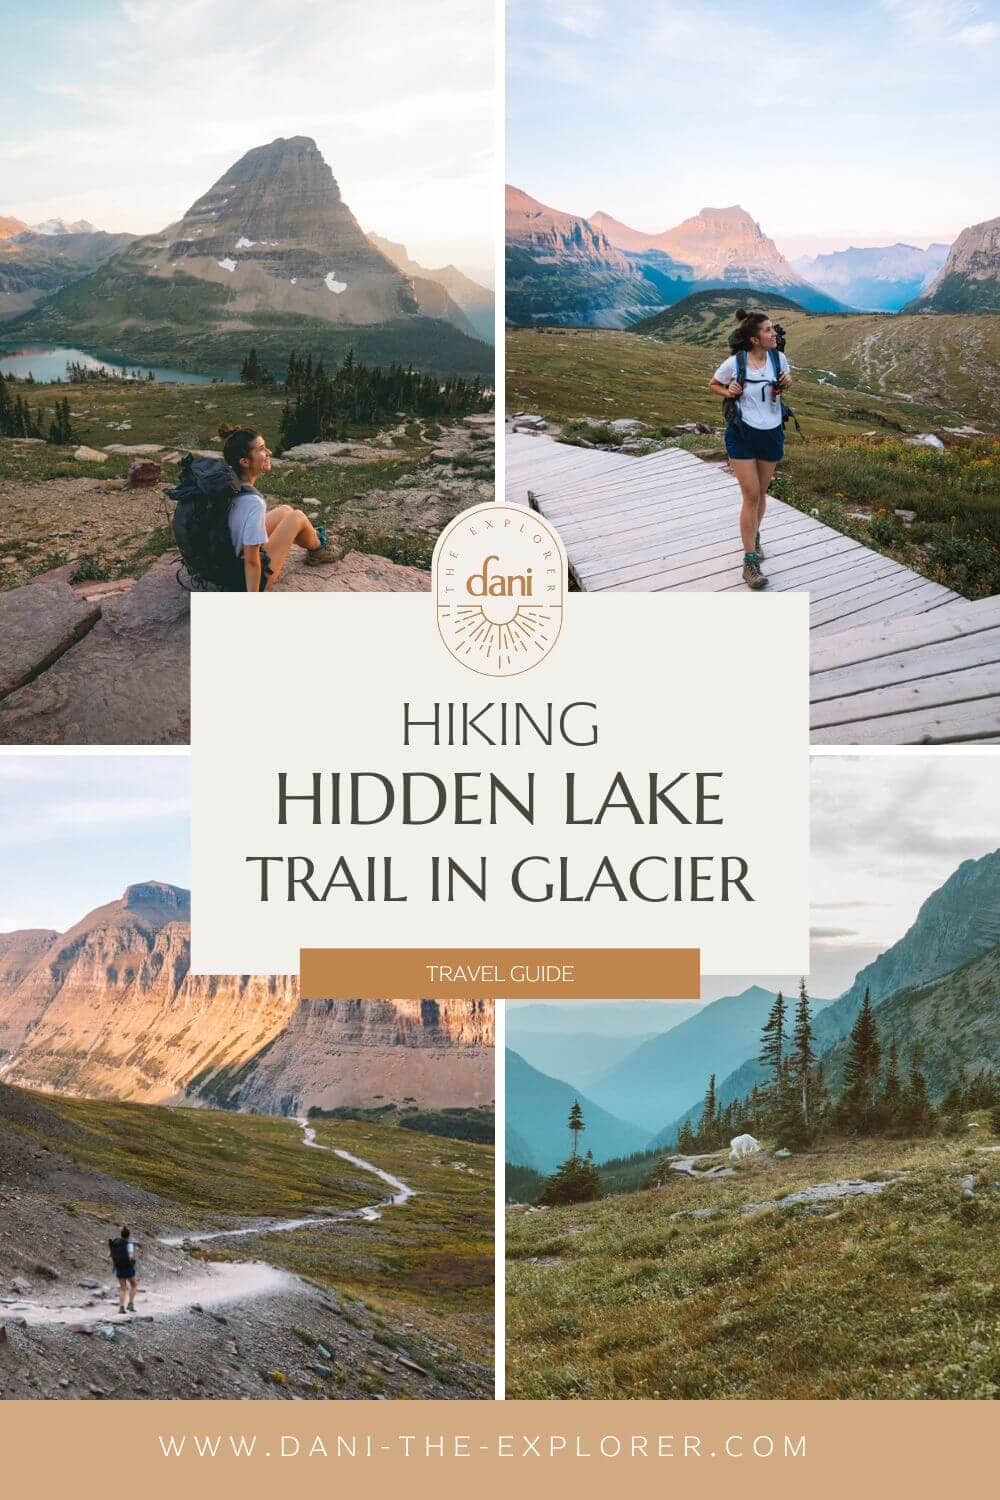 Hiking hidden lake overlook trail in glacier np